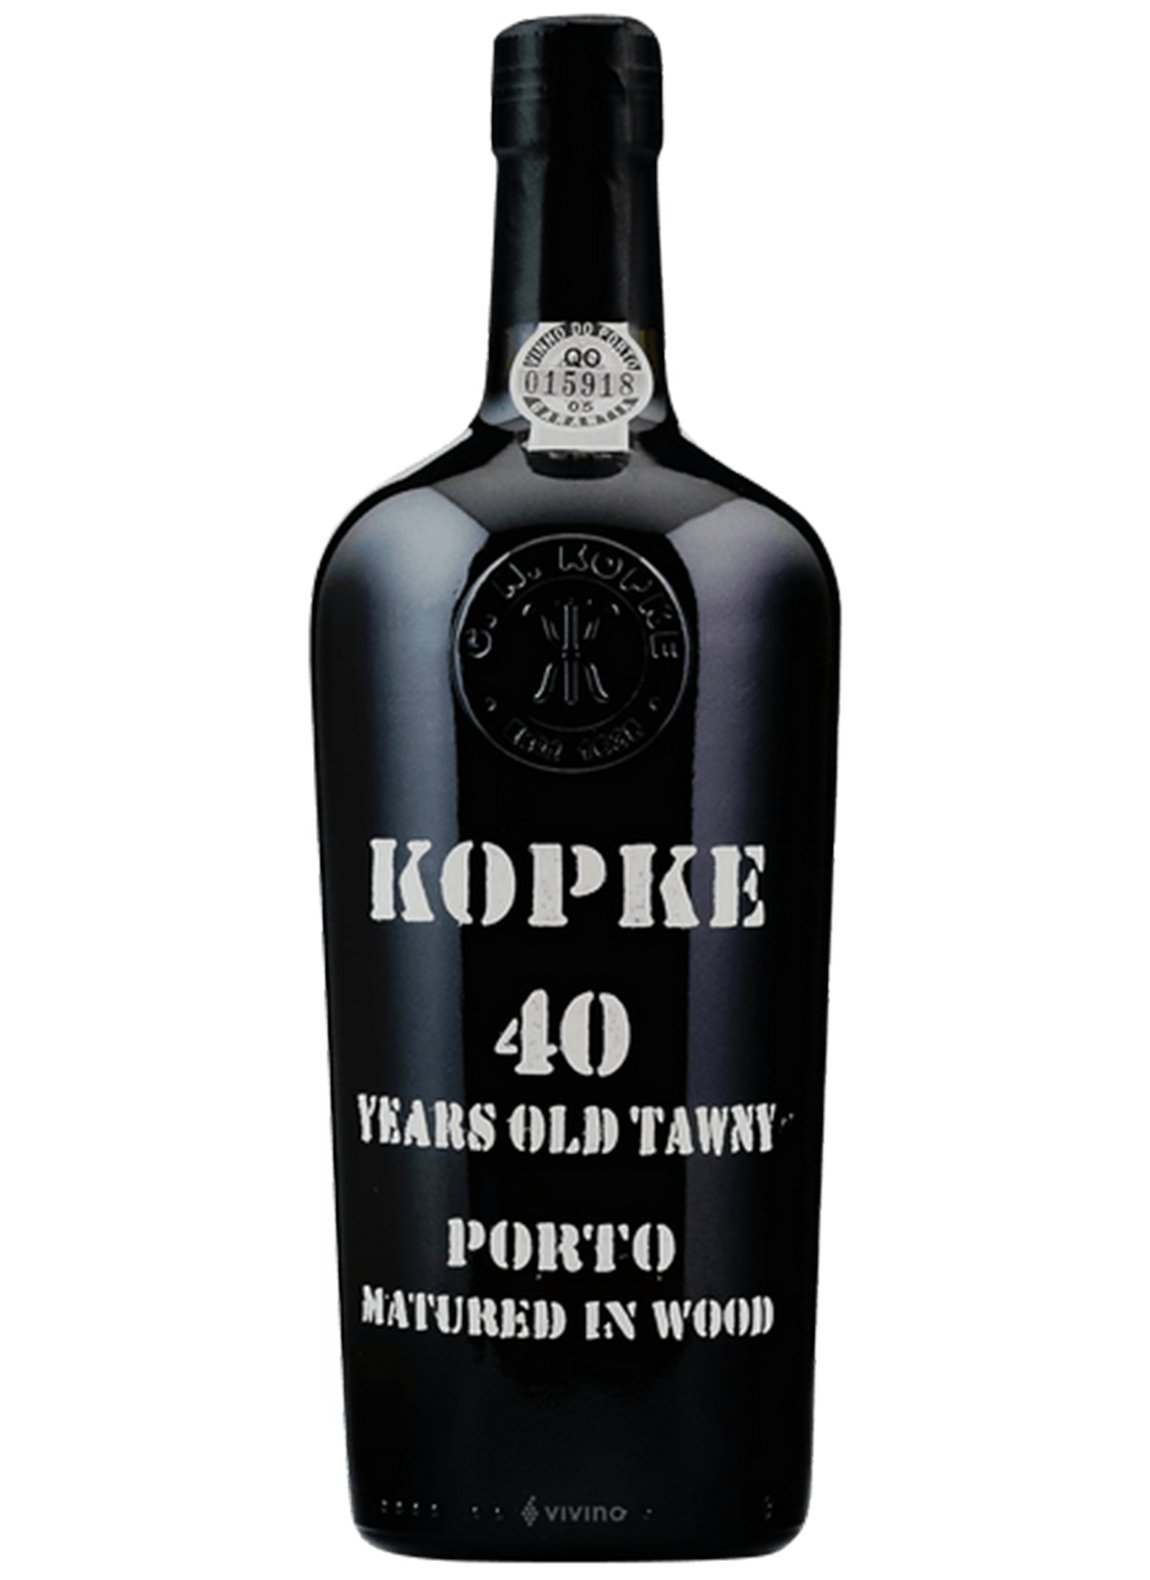 Kopke Tawny 40 year old - Wine Portugal Port - Liquor Wine Cave